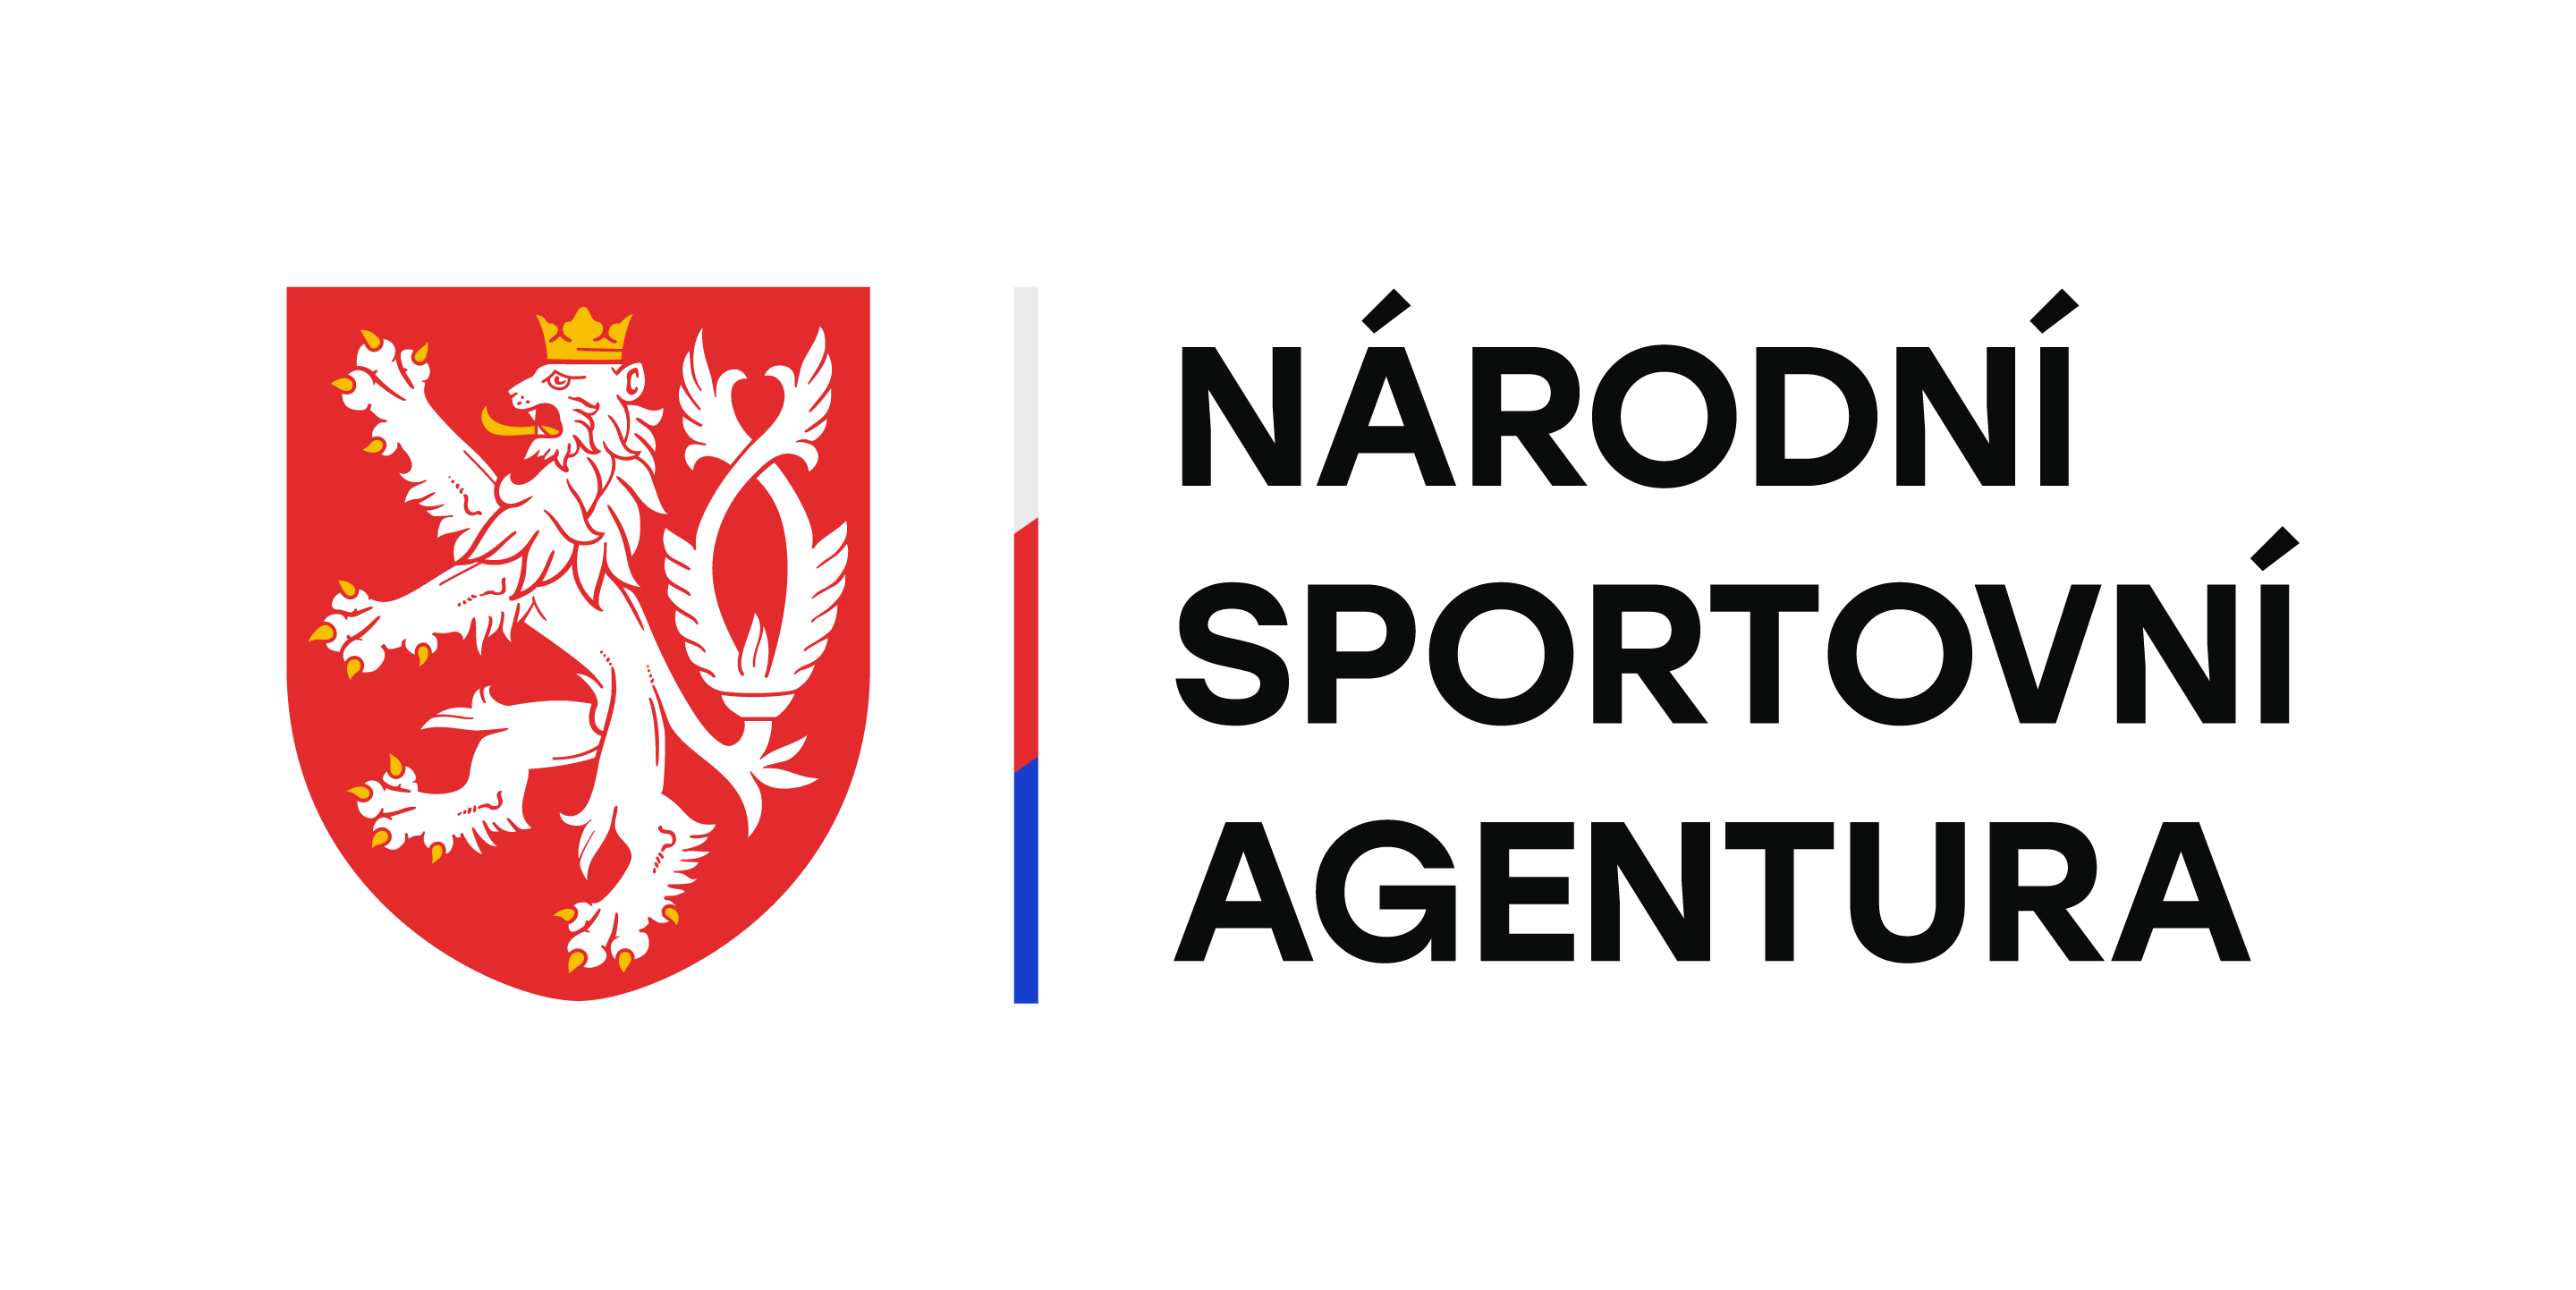 Narodni sportovní agentura